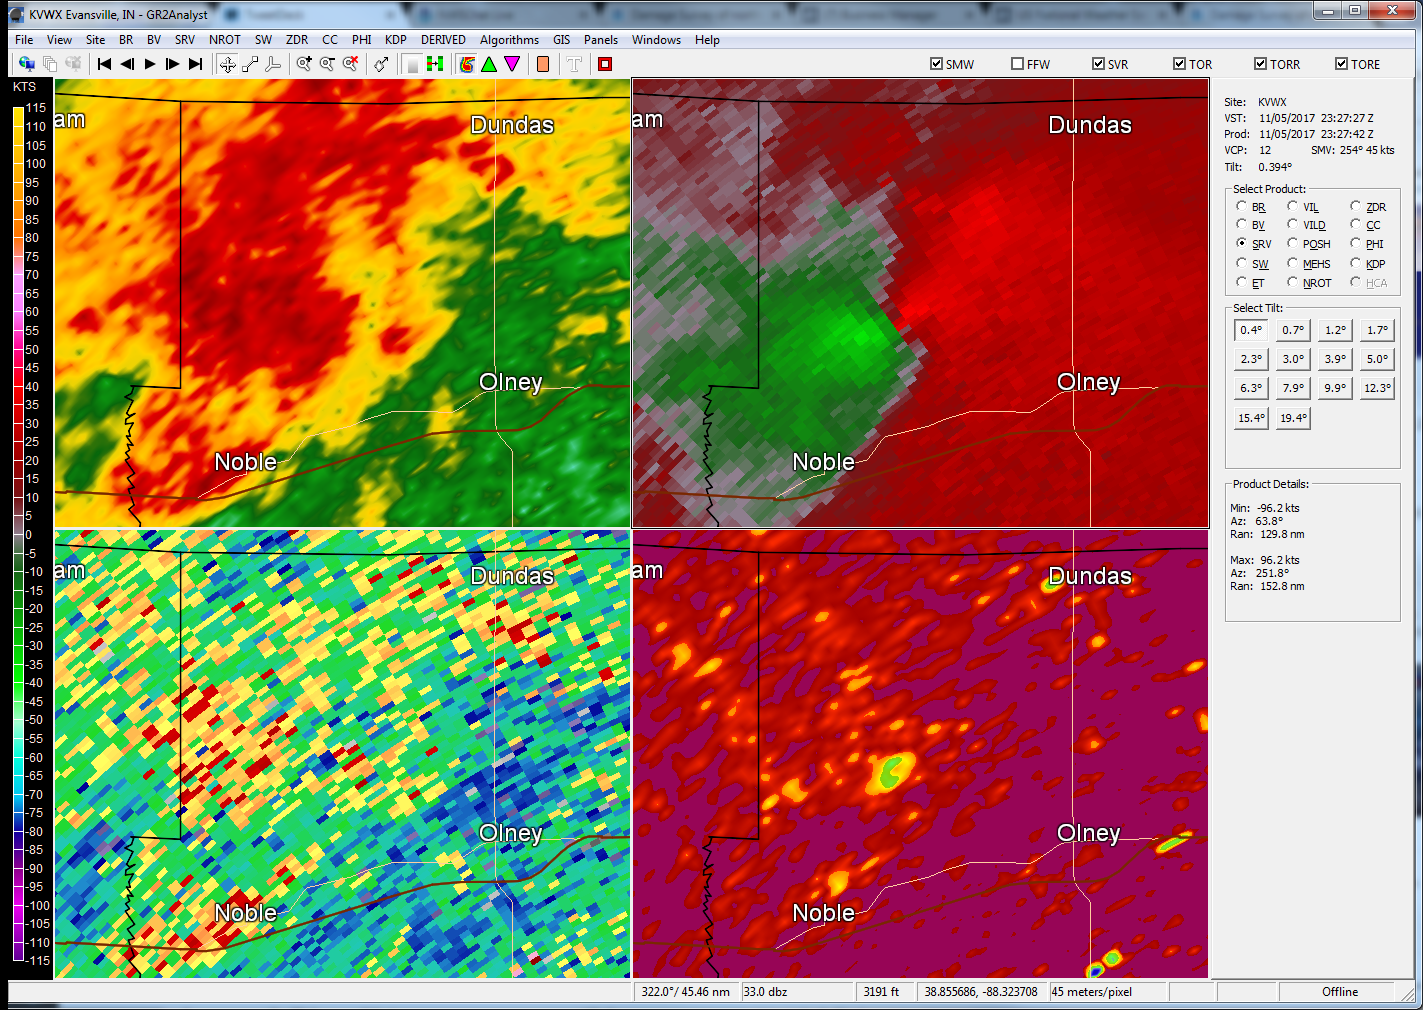 Evansville radar image from 5:27 pm